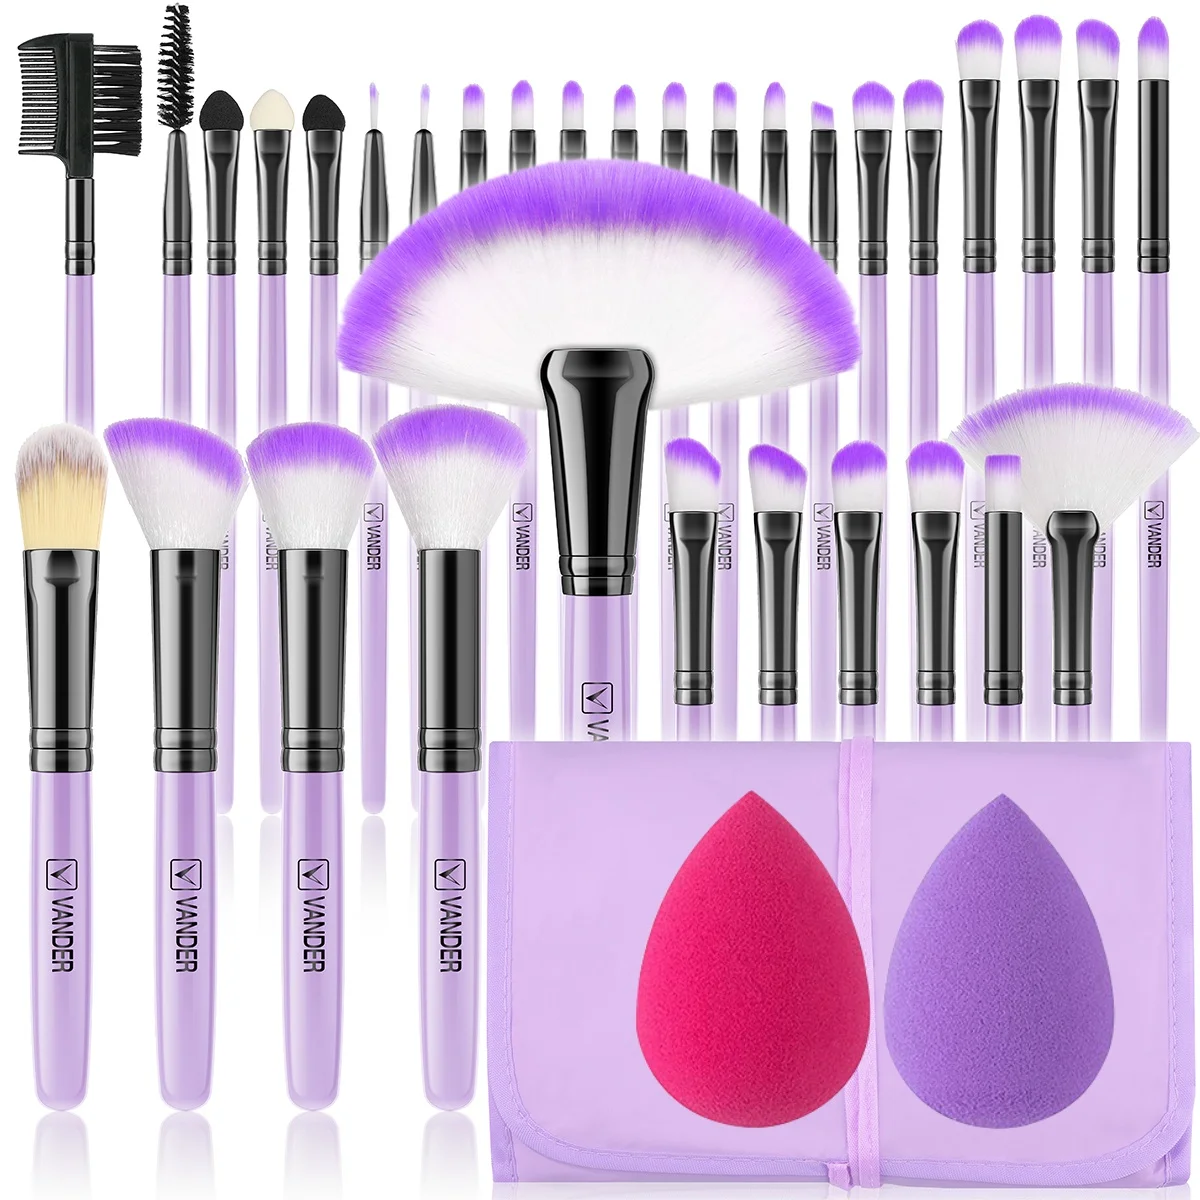 

10-32PCS Makeup Brush Set Soft Fluffy Powder Foundation Contour Blush Concealer Eyeshadow Blending Highlighter Women Beauty Tool